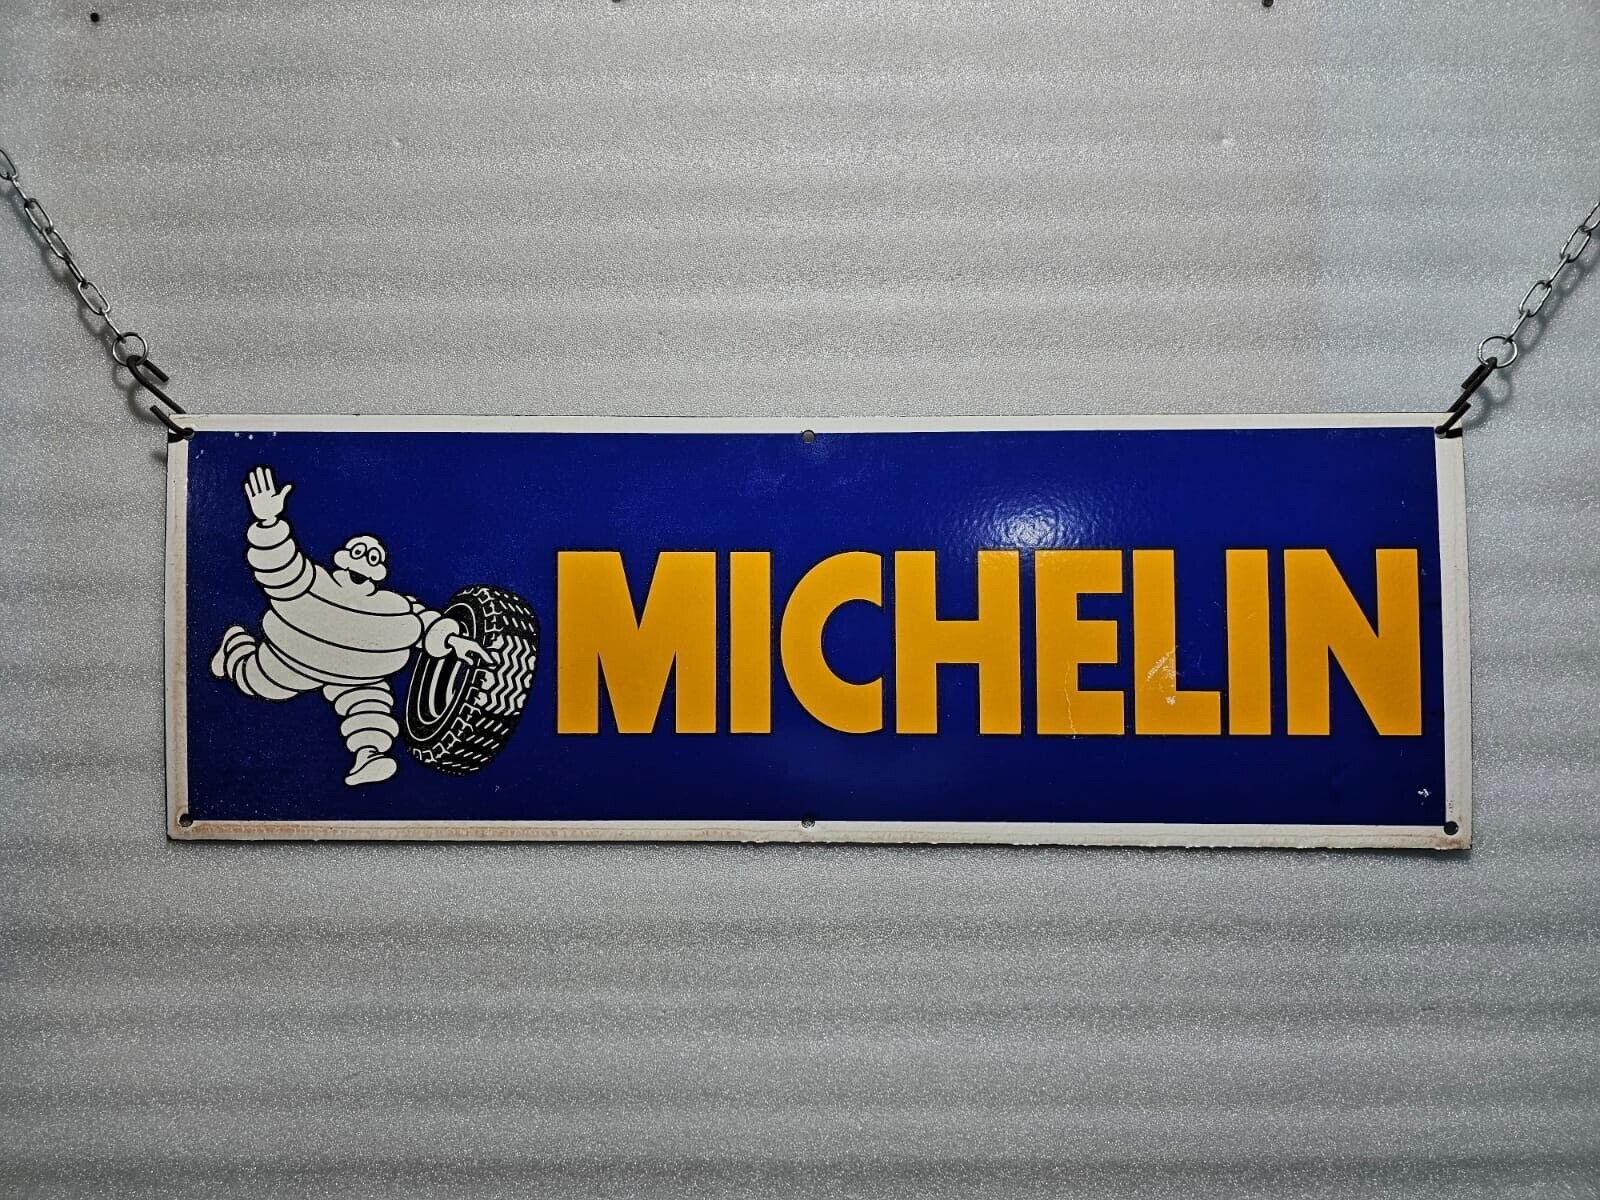 MICHELIN MAN TIRES HORIZONTAL 36x12” PORCELAIN METAL GARAGE SERVICE  PLATE SIGN